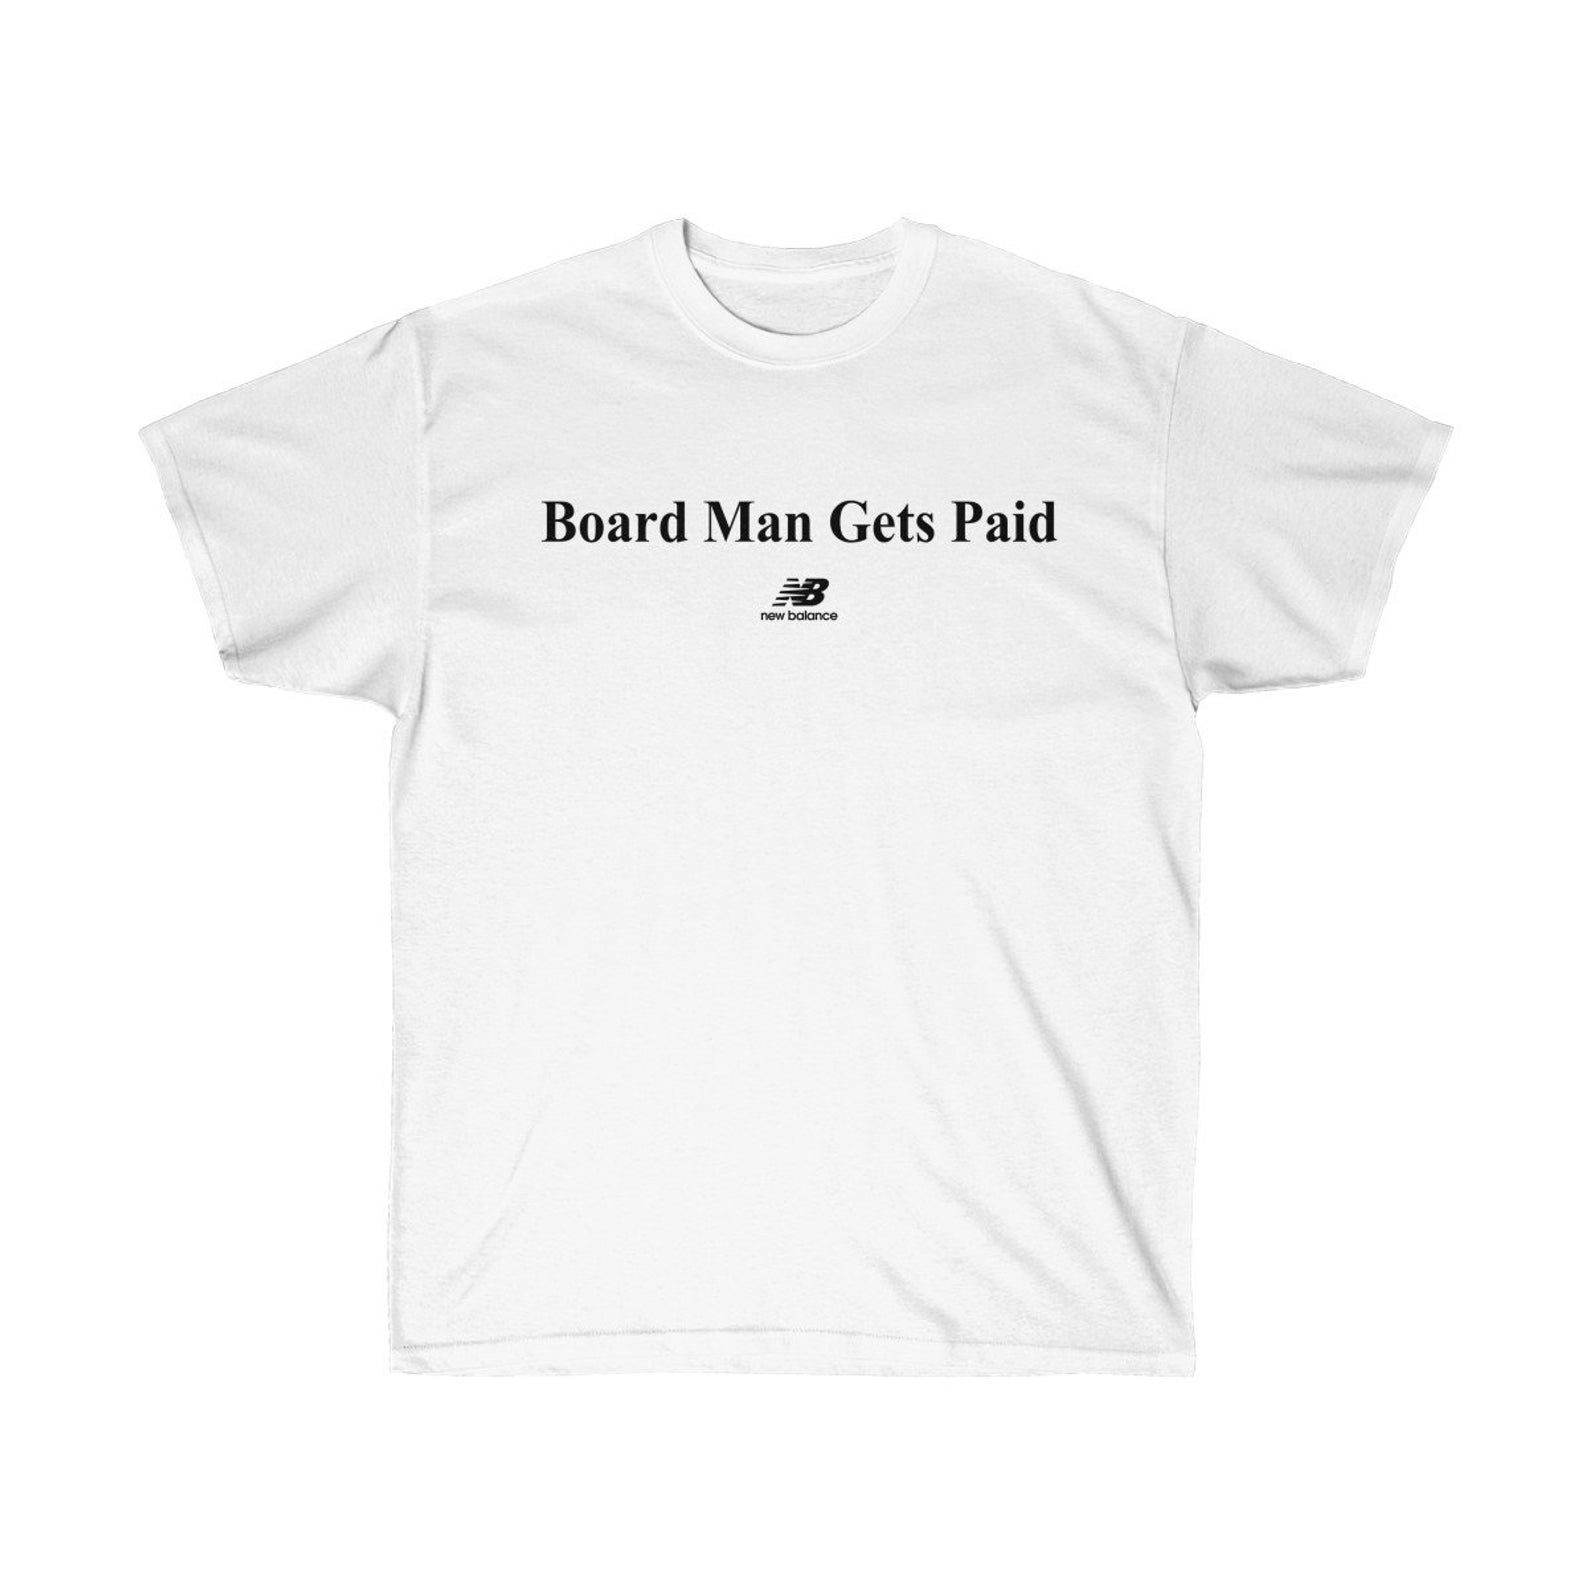 new balance boardman